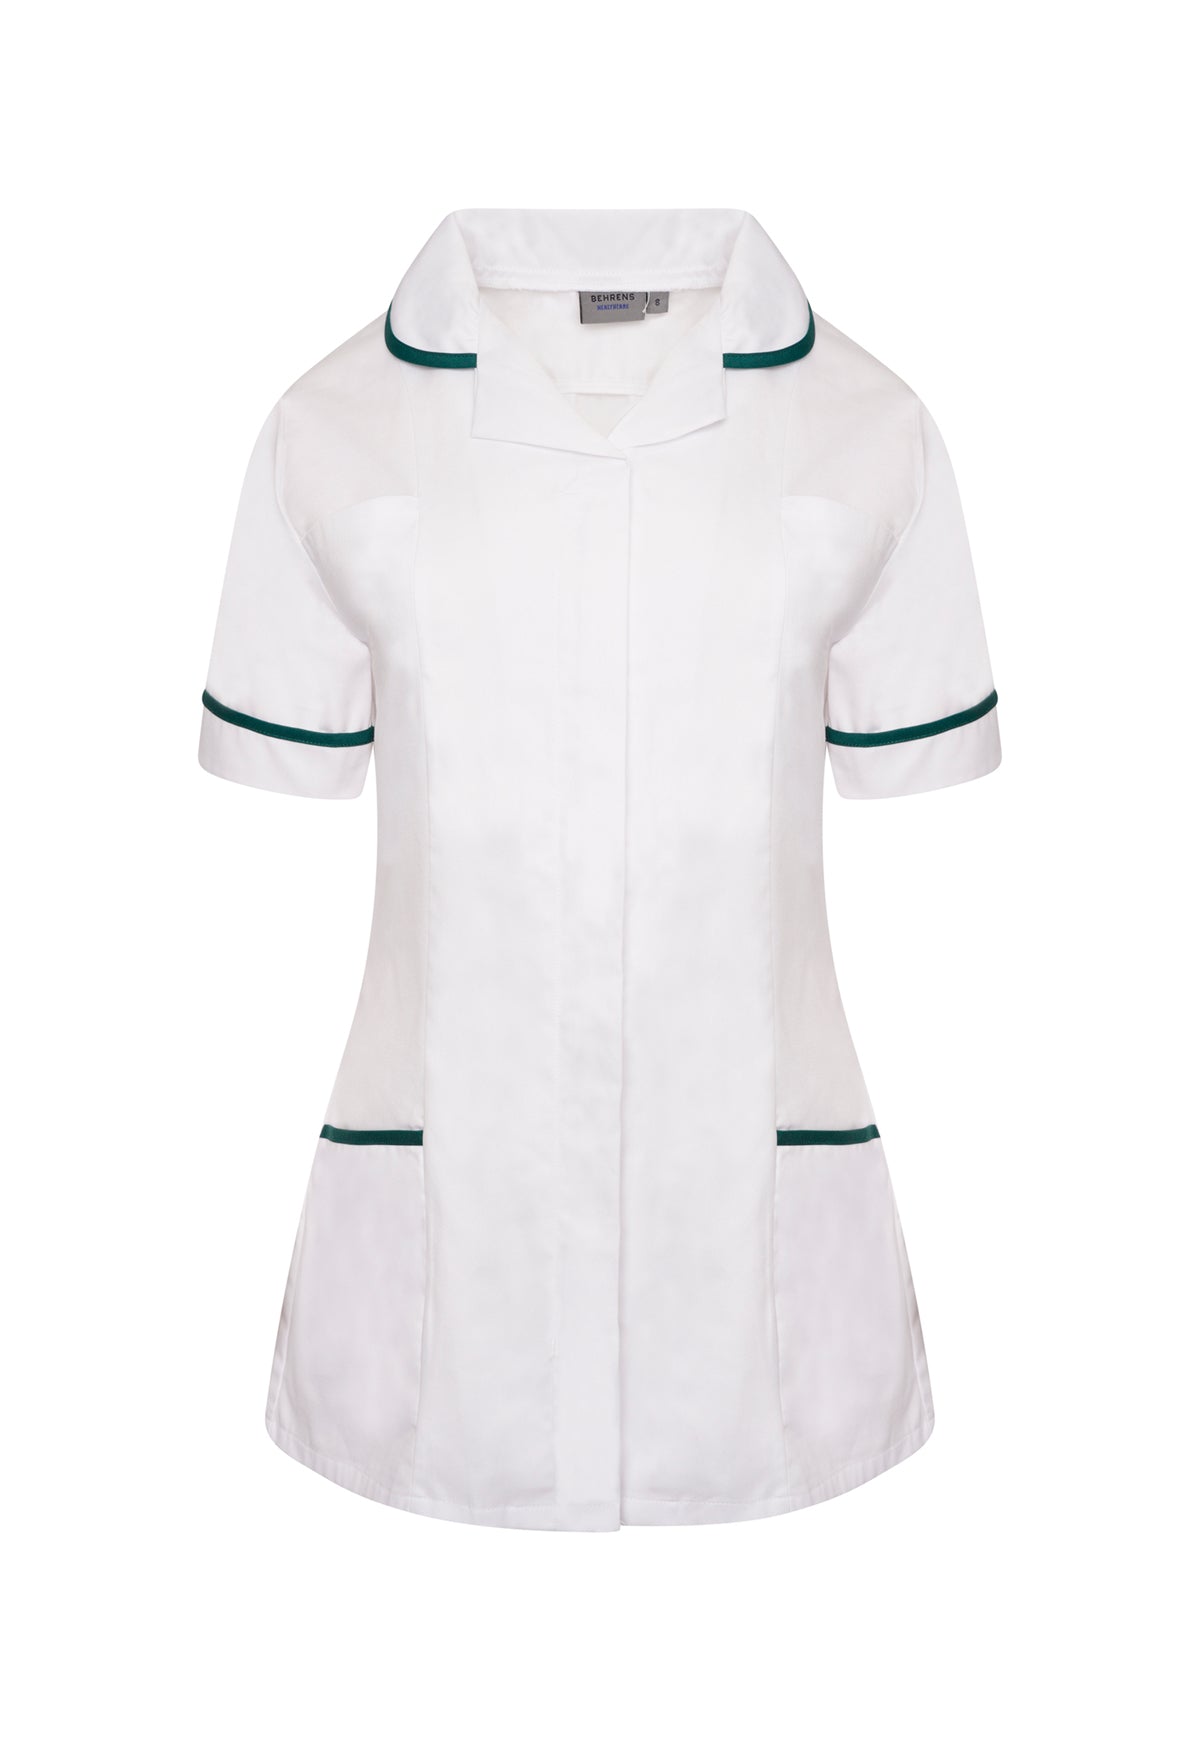 Student Nurses Tunic - The Work Uniform Company